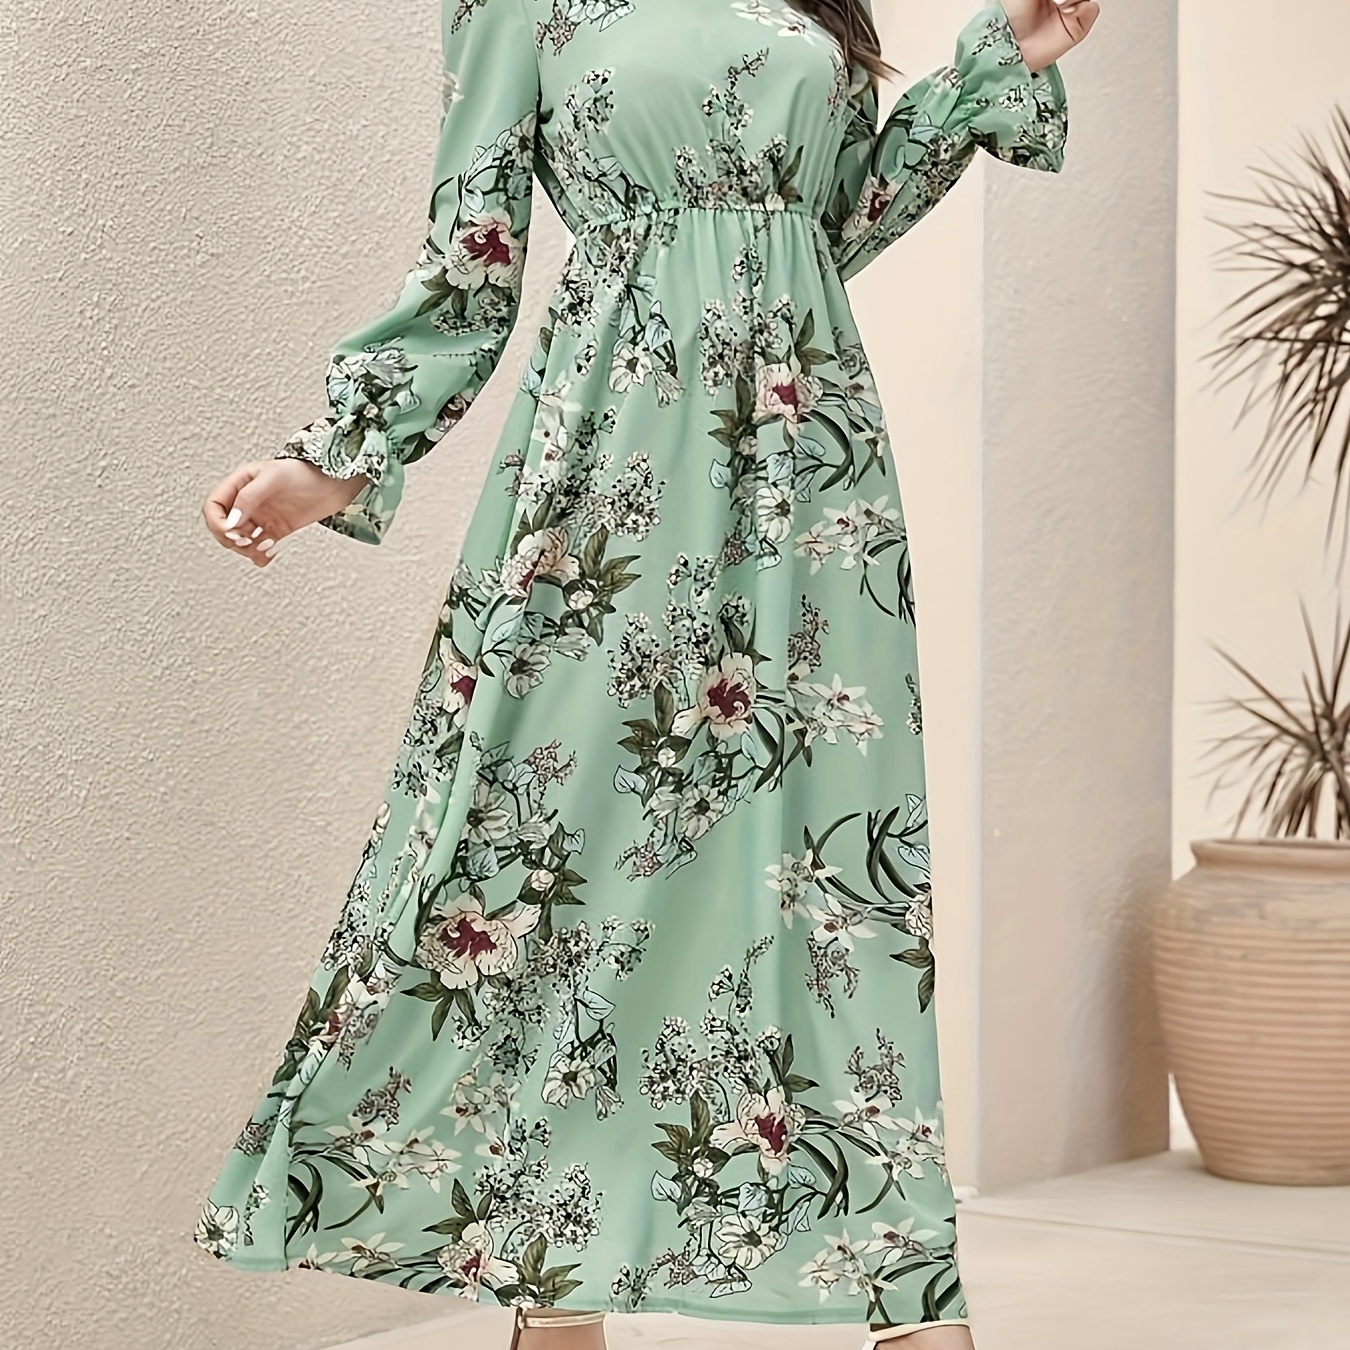 

Floral Print Cinched Waist Dress, Elegant Ruffle Sleeve A-line Dress, Women's Clothing